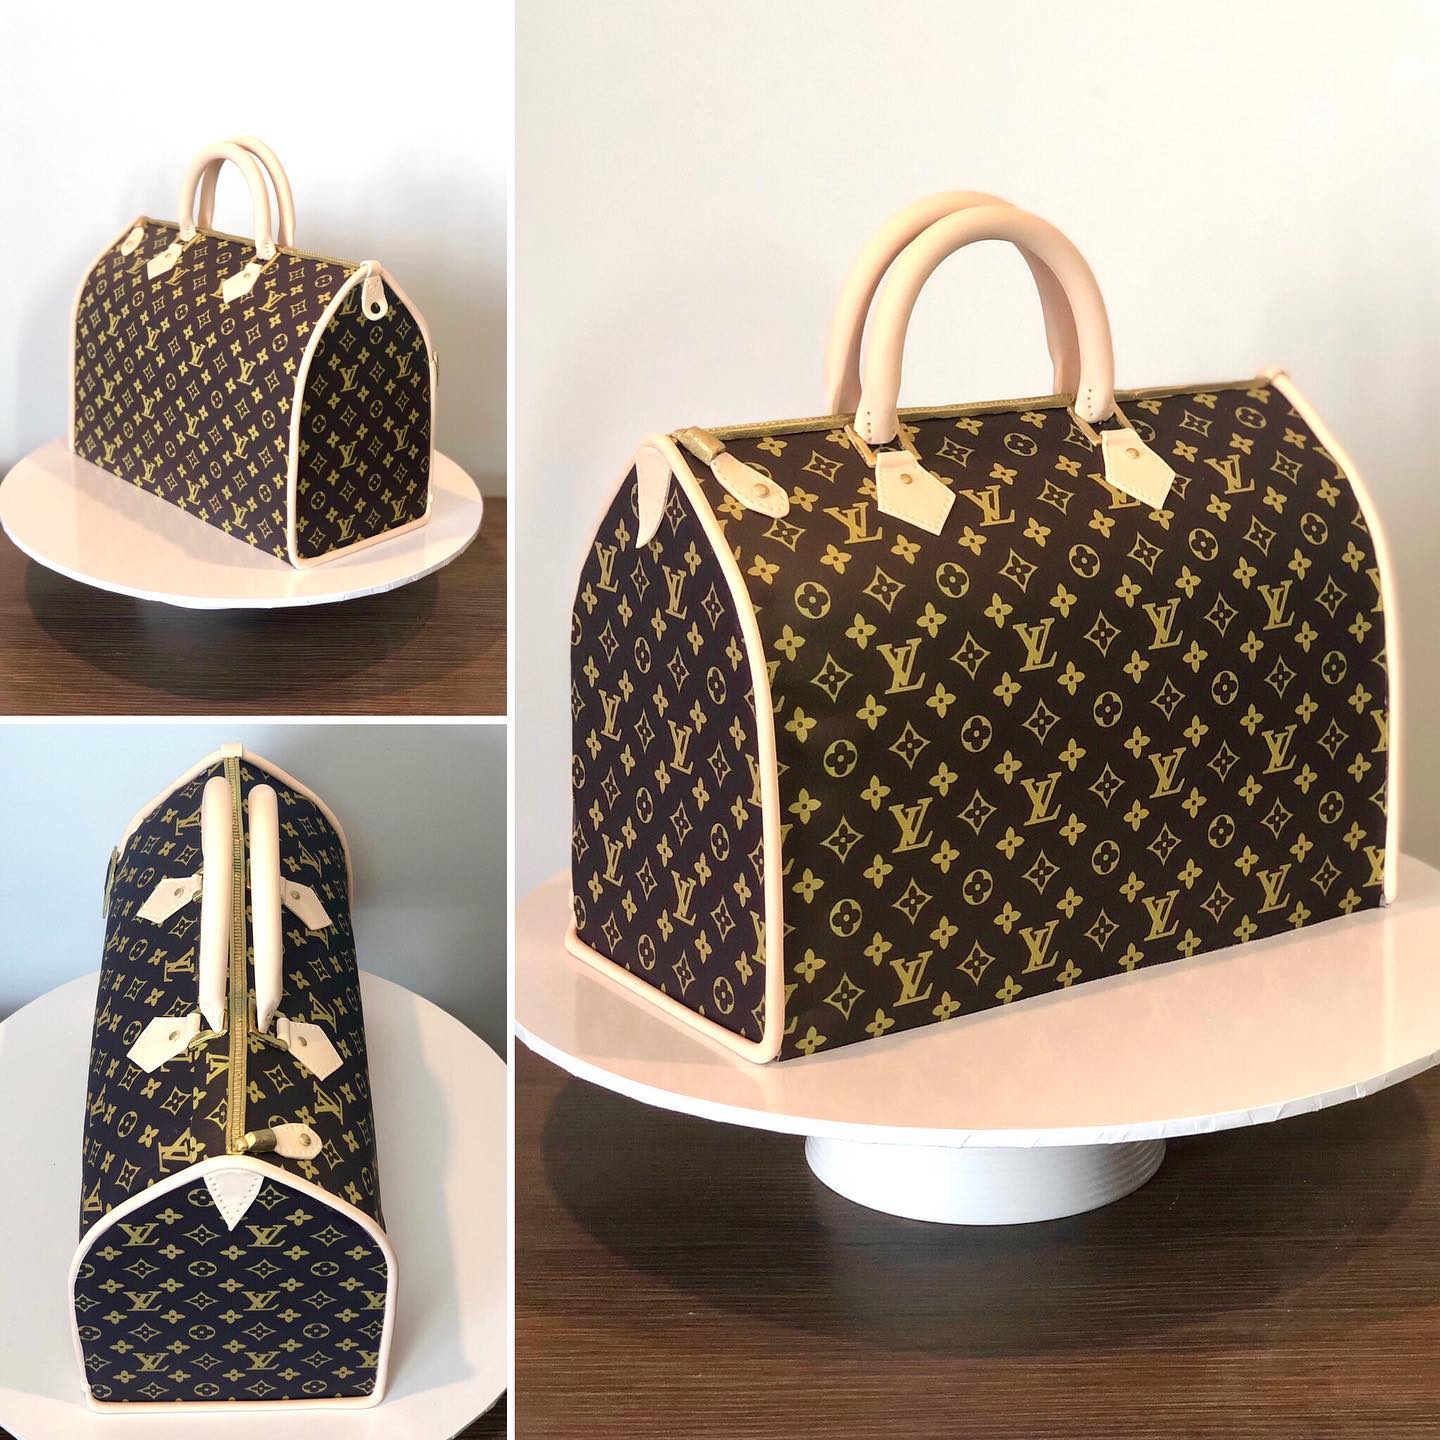 Louis Vuitton Cake Wrap 